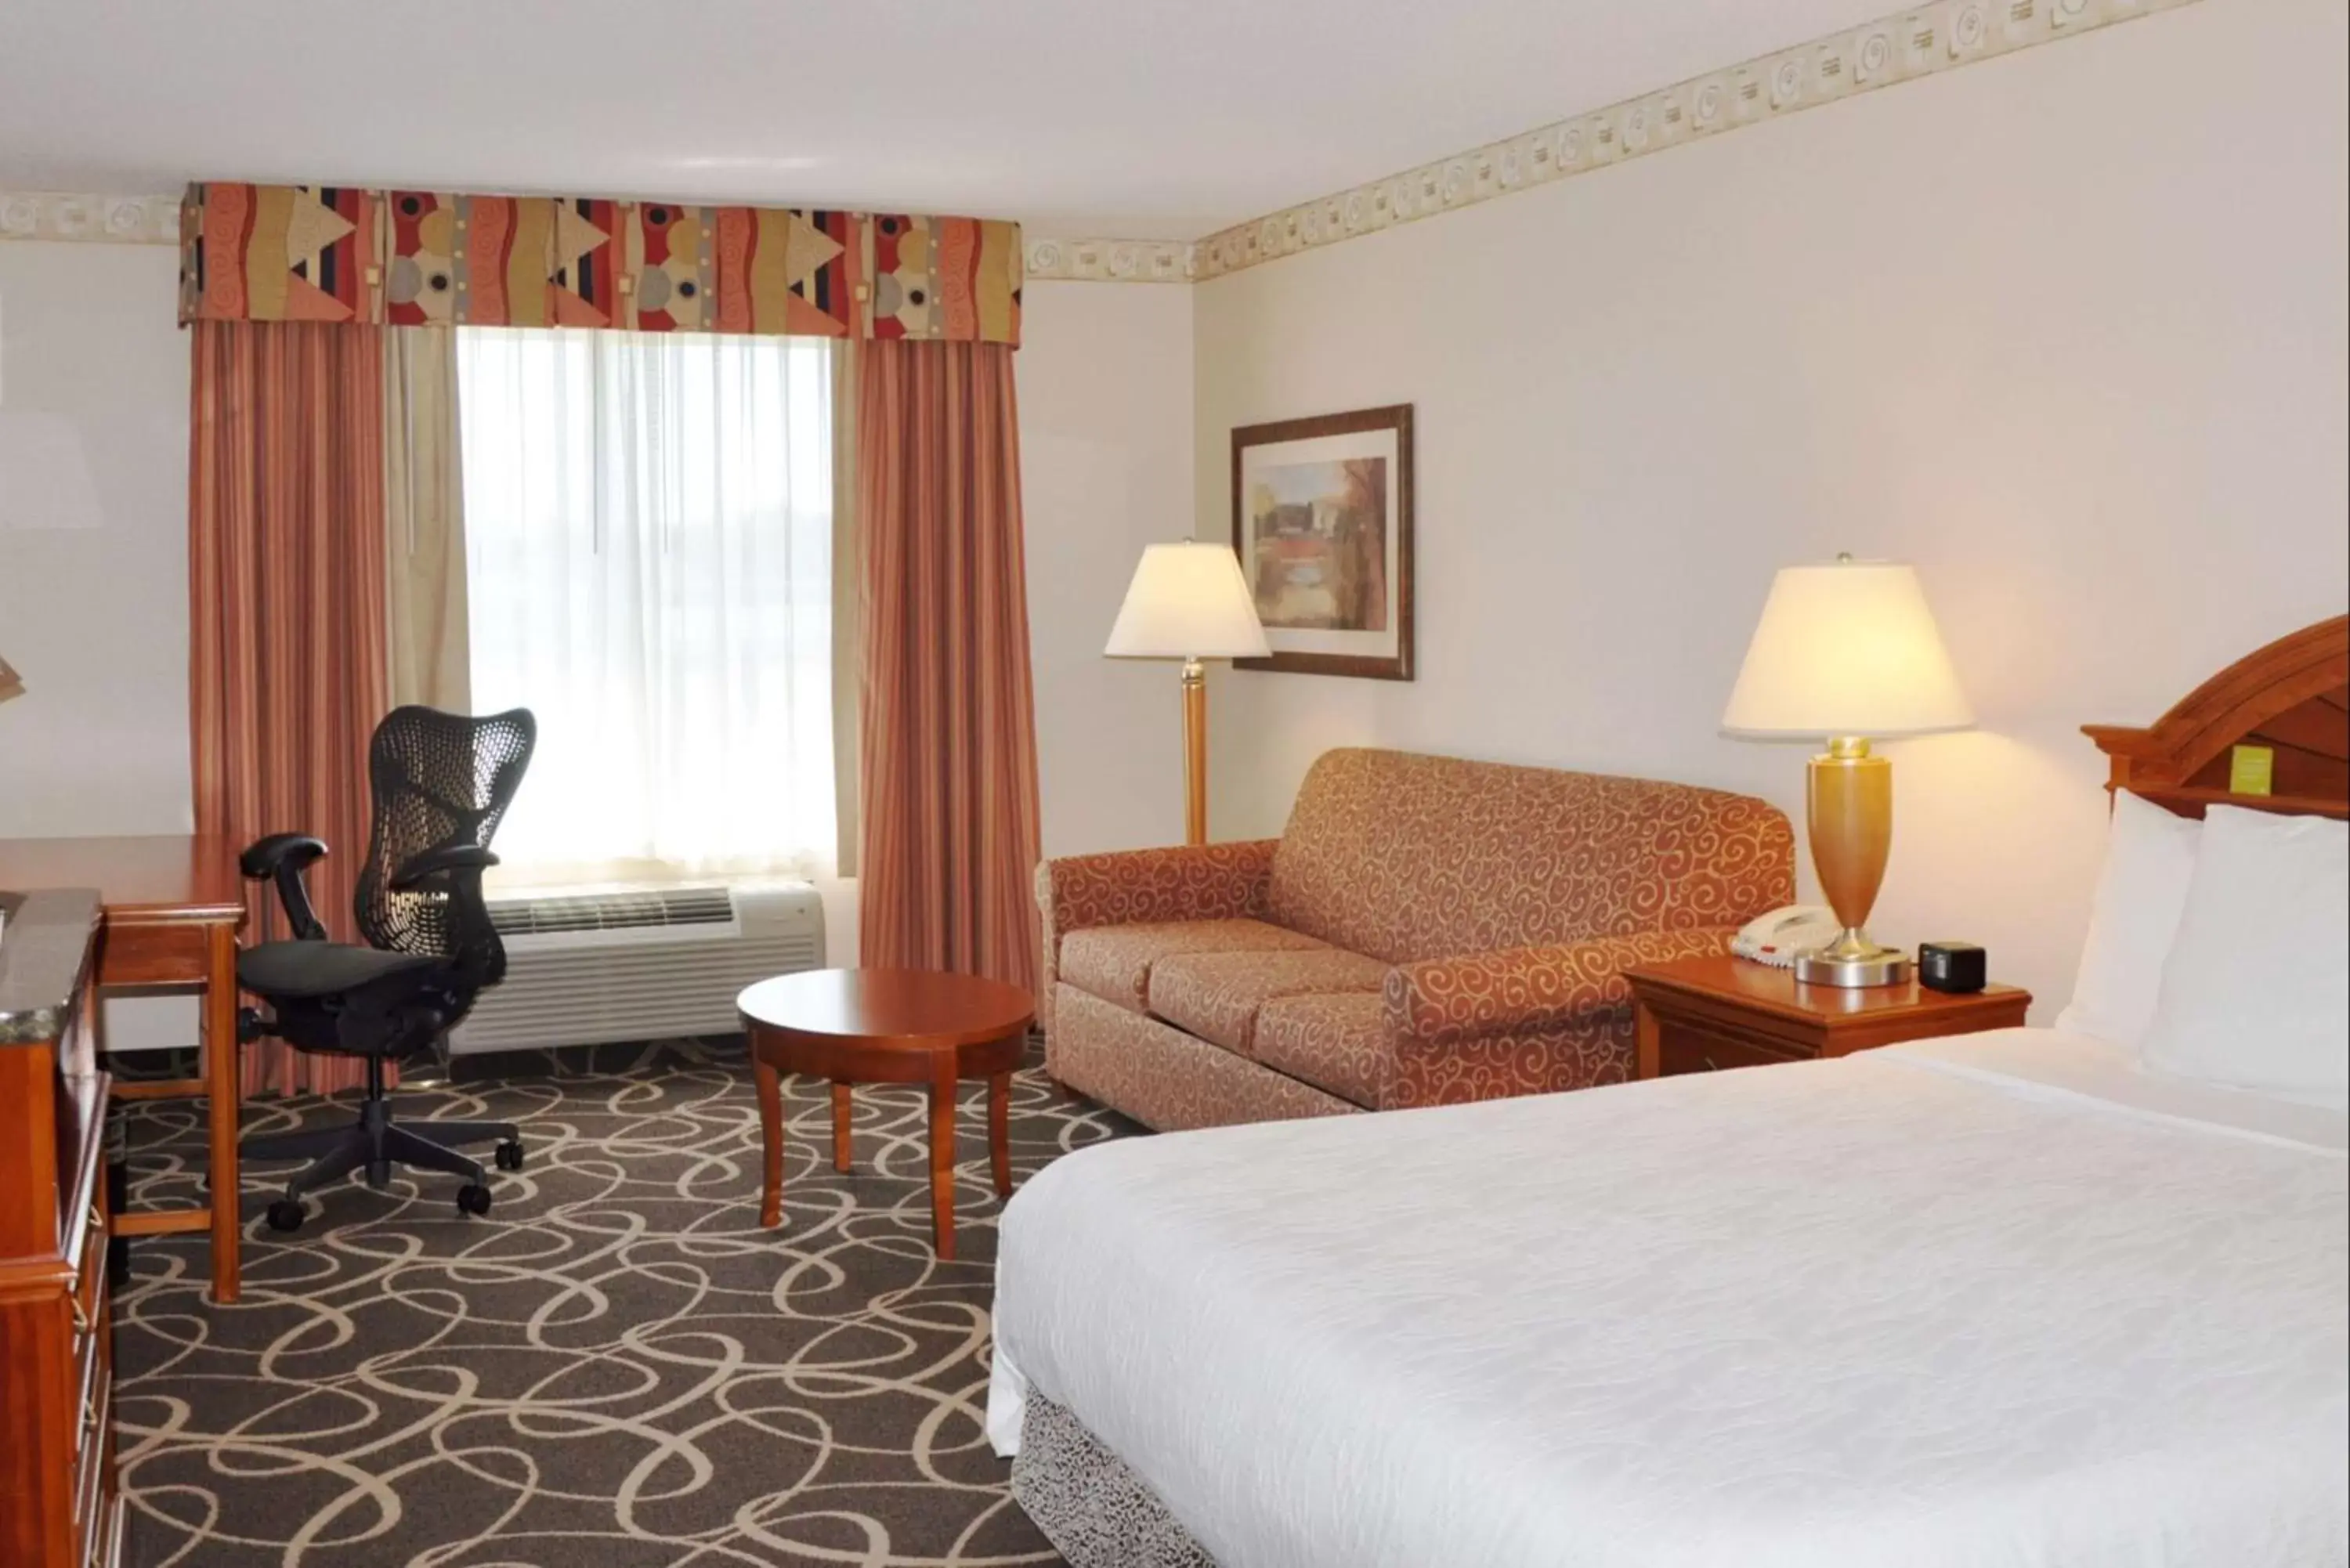 Bedroom in Hilton Garden Inn Gettysburg